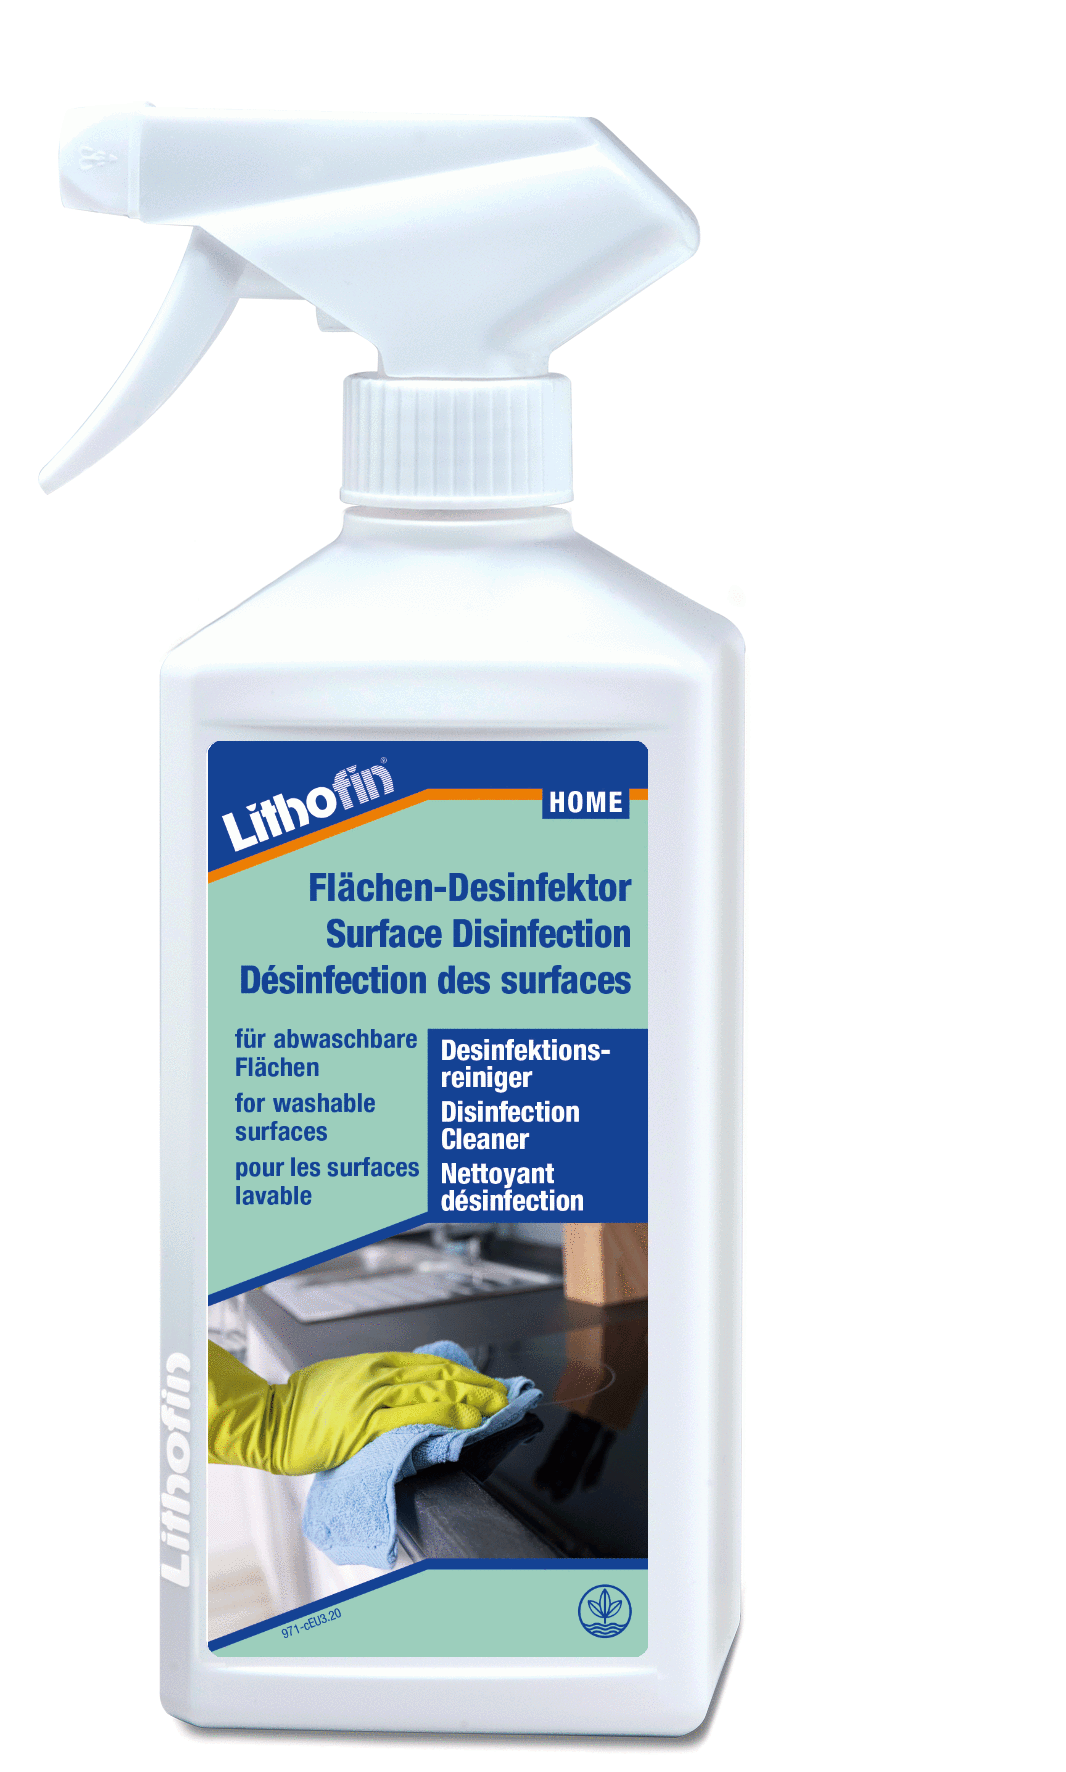 Lithofin Multipurpose Surface Disinfectant